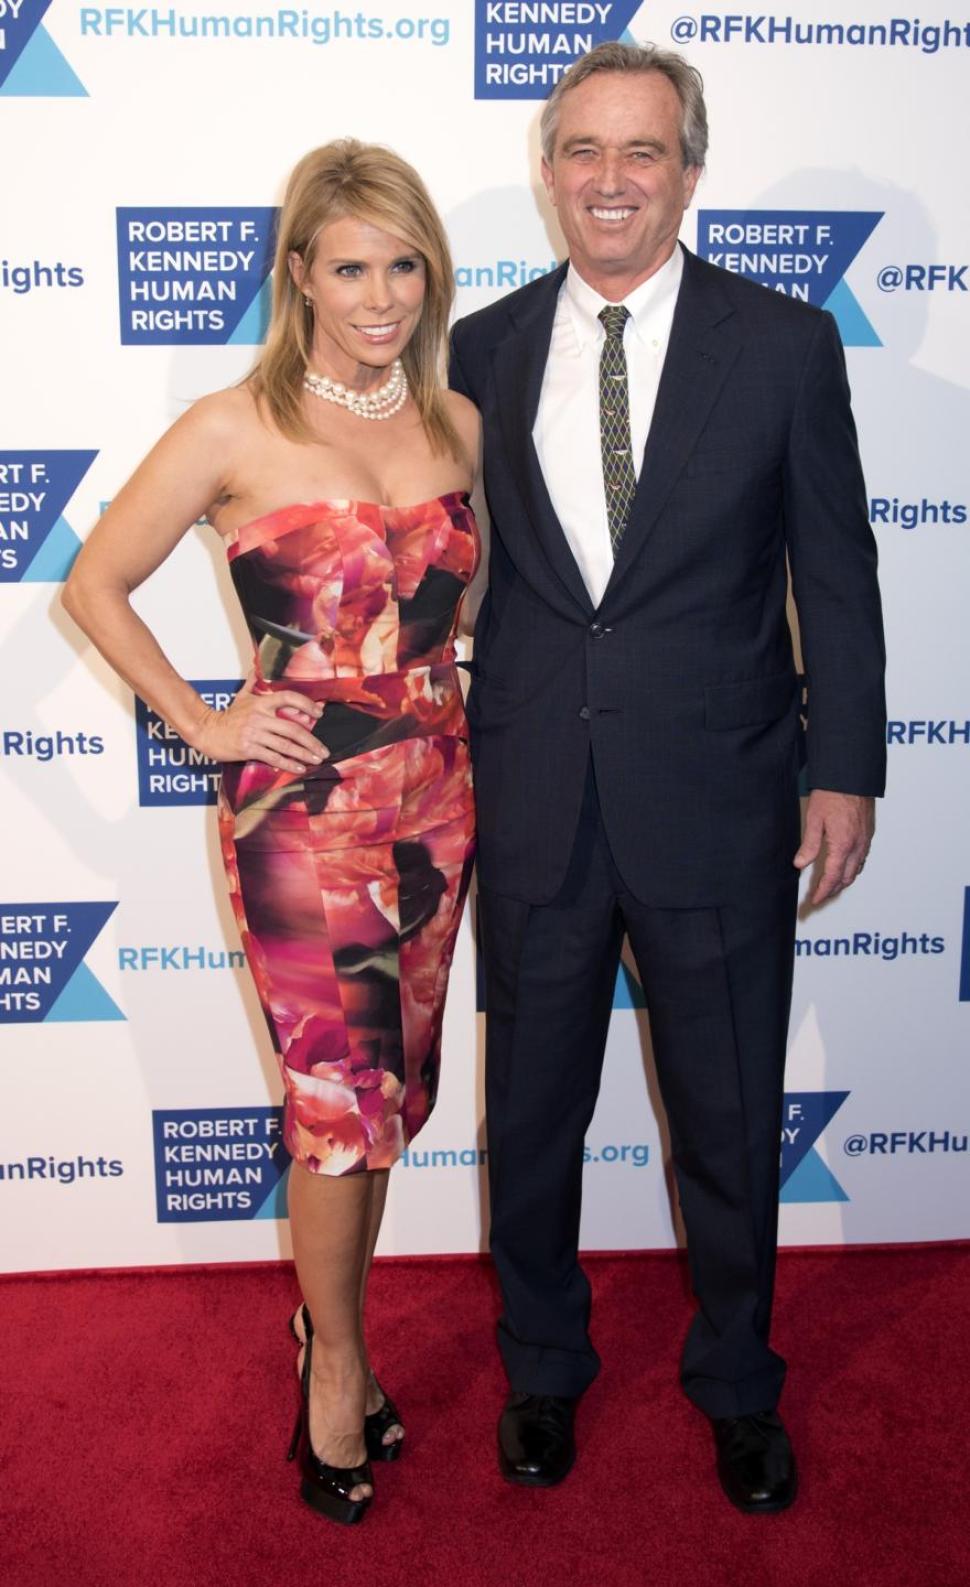 Cheryl Hines and Robert Kennedy Jr. at the Ripple of Hope gala